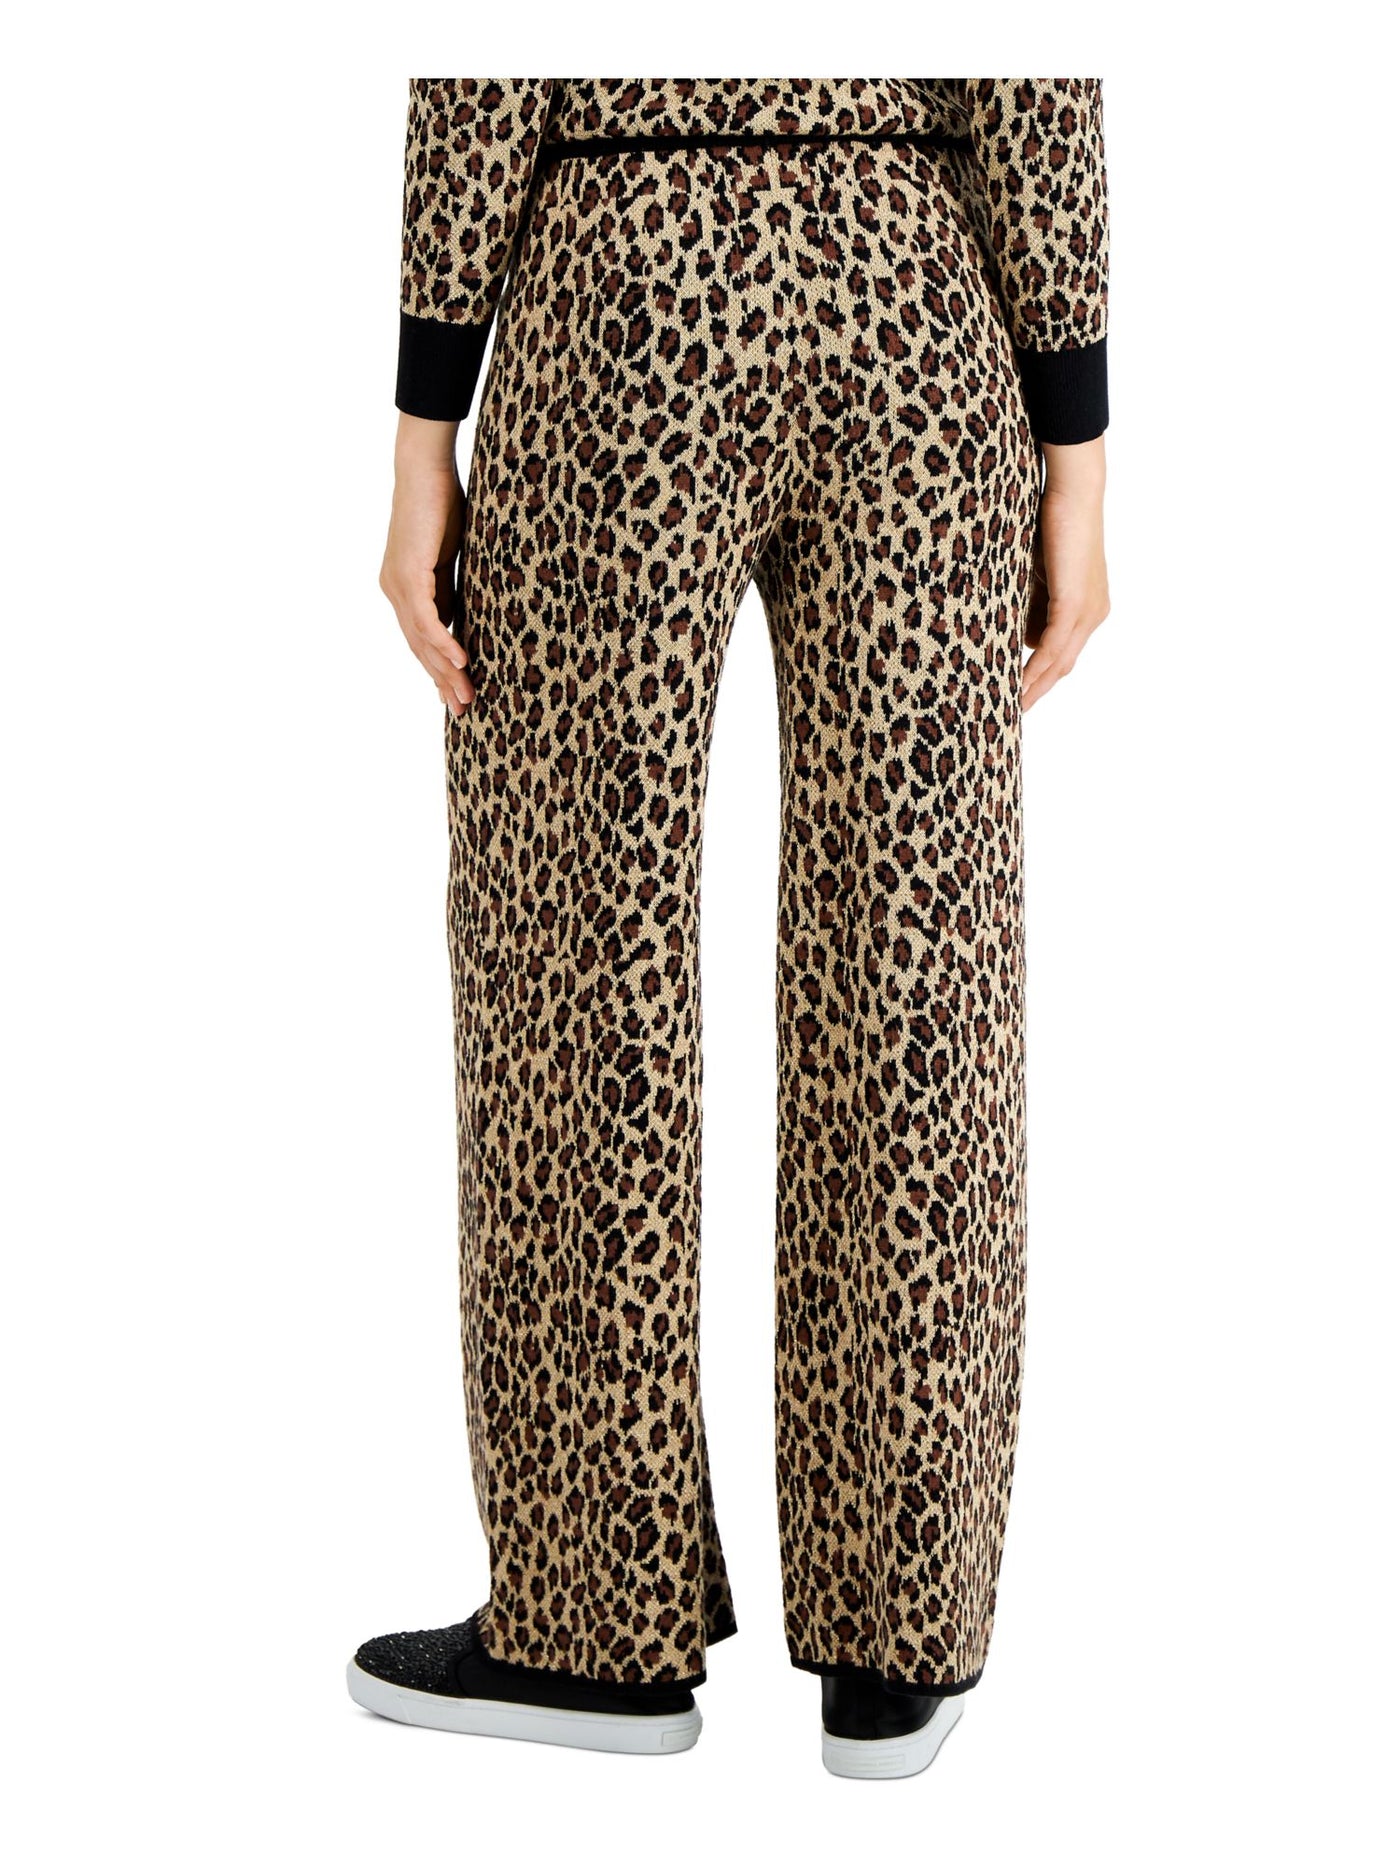 CHARTER CLUB Womens Brown Metallic Mid-rise Sweater Elastic Waist Animal Print Pants M